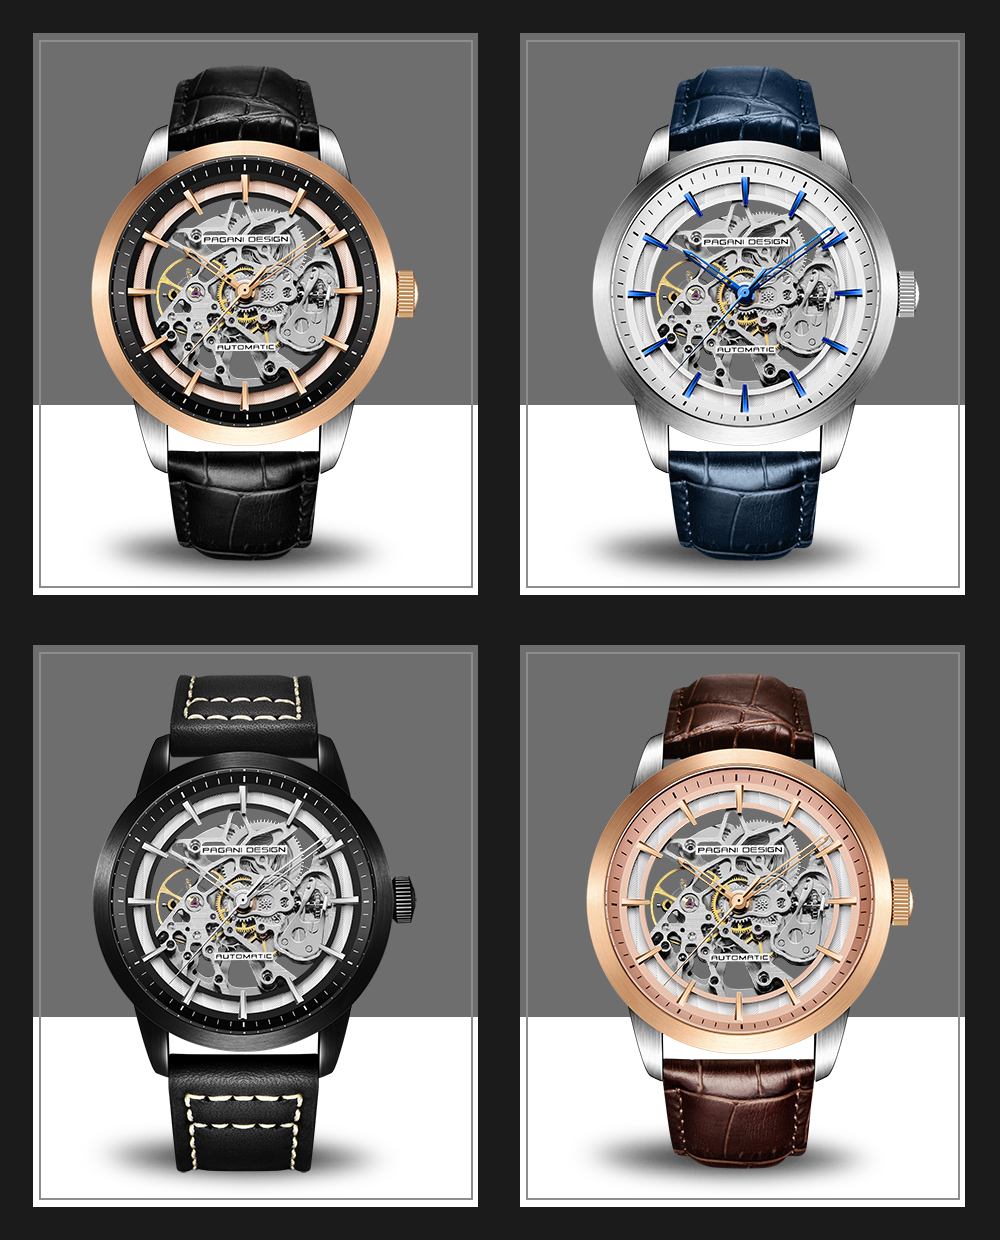 PAGANI DESIGN Business Man Watch Luxury Skeleton Hollow Leather Men's Wristwatch New Mechanical Male Clock Relogio Masculino